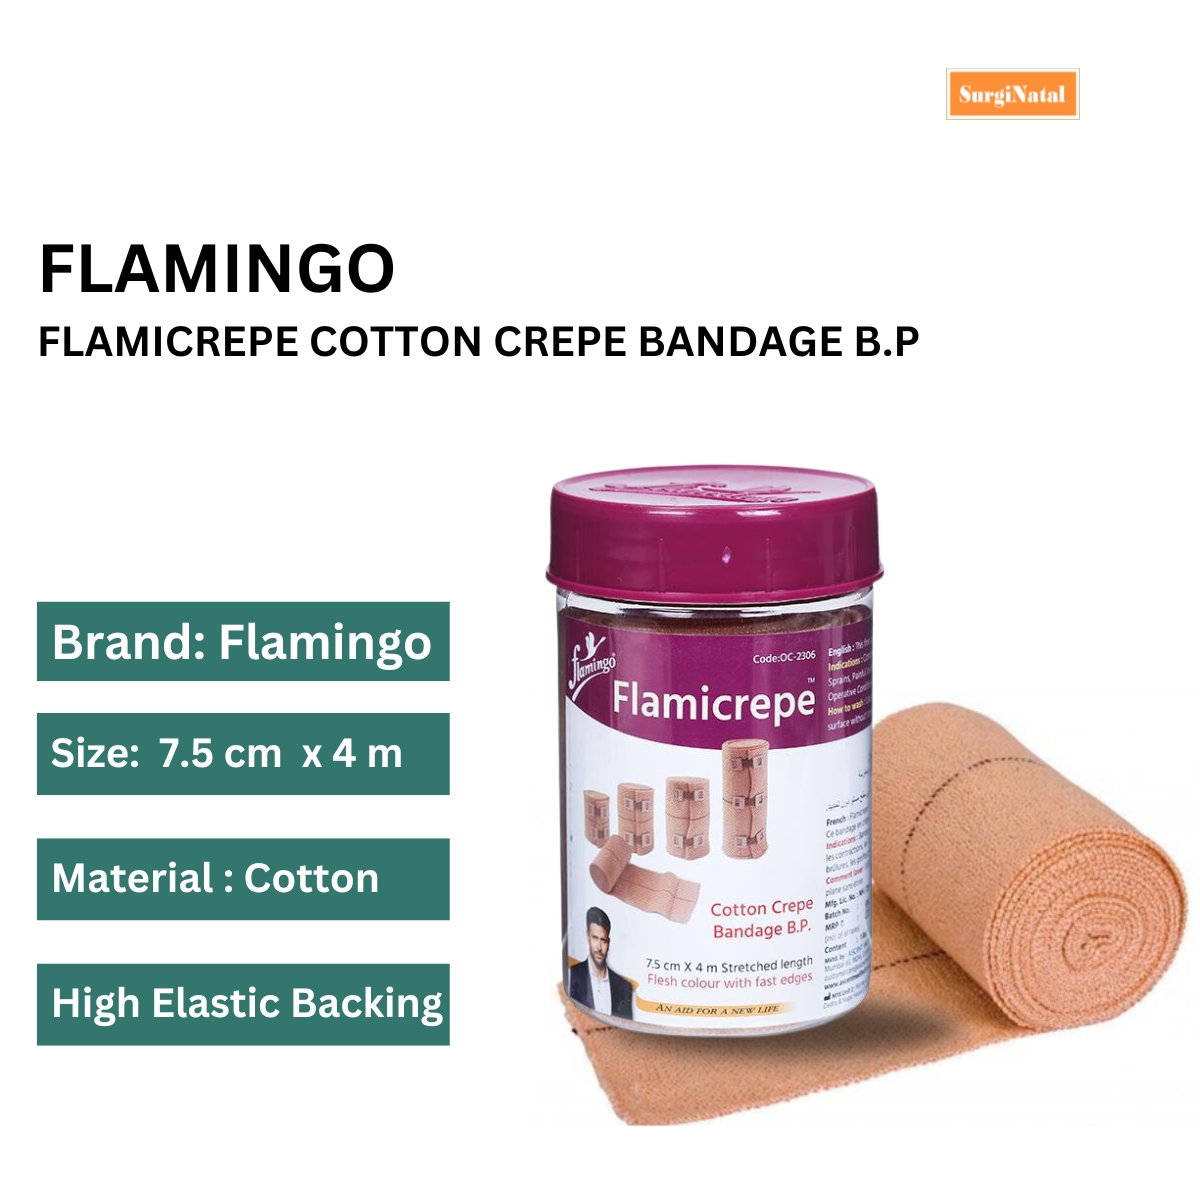 flamingo flamicrepe cotton crepe bandage b.p 7.5 cm